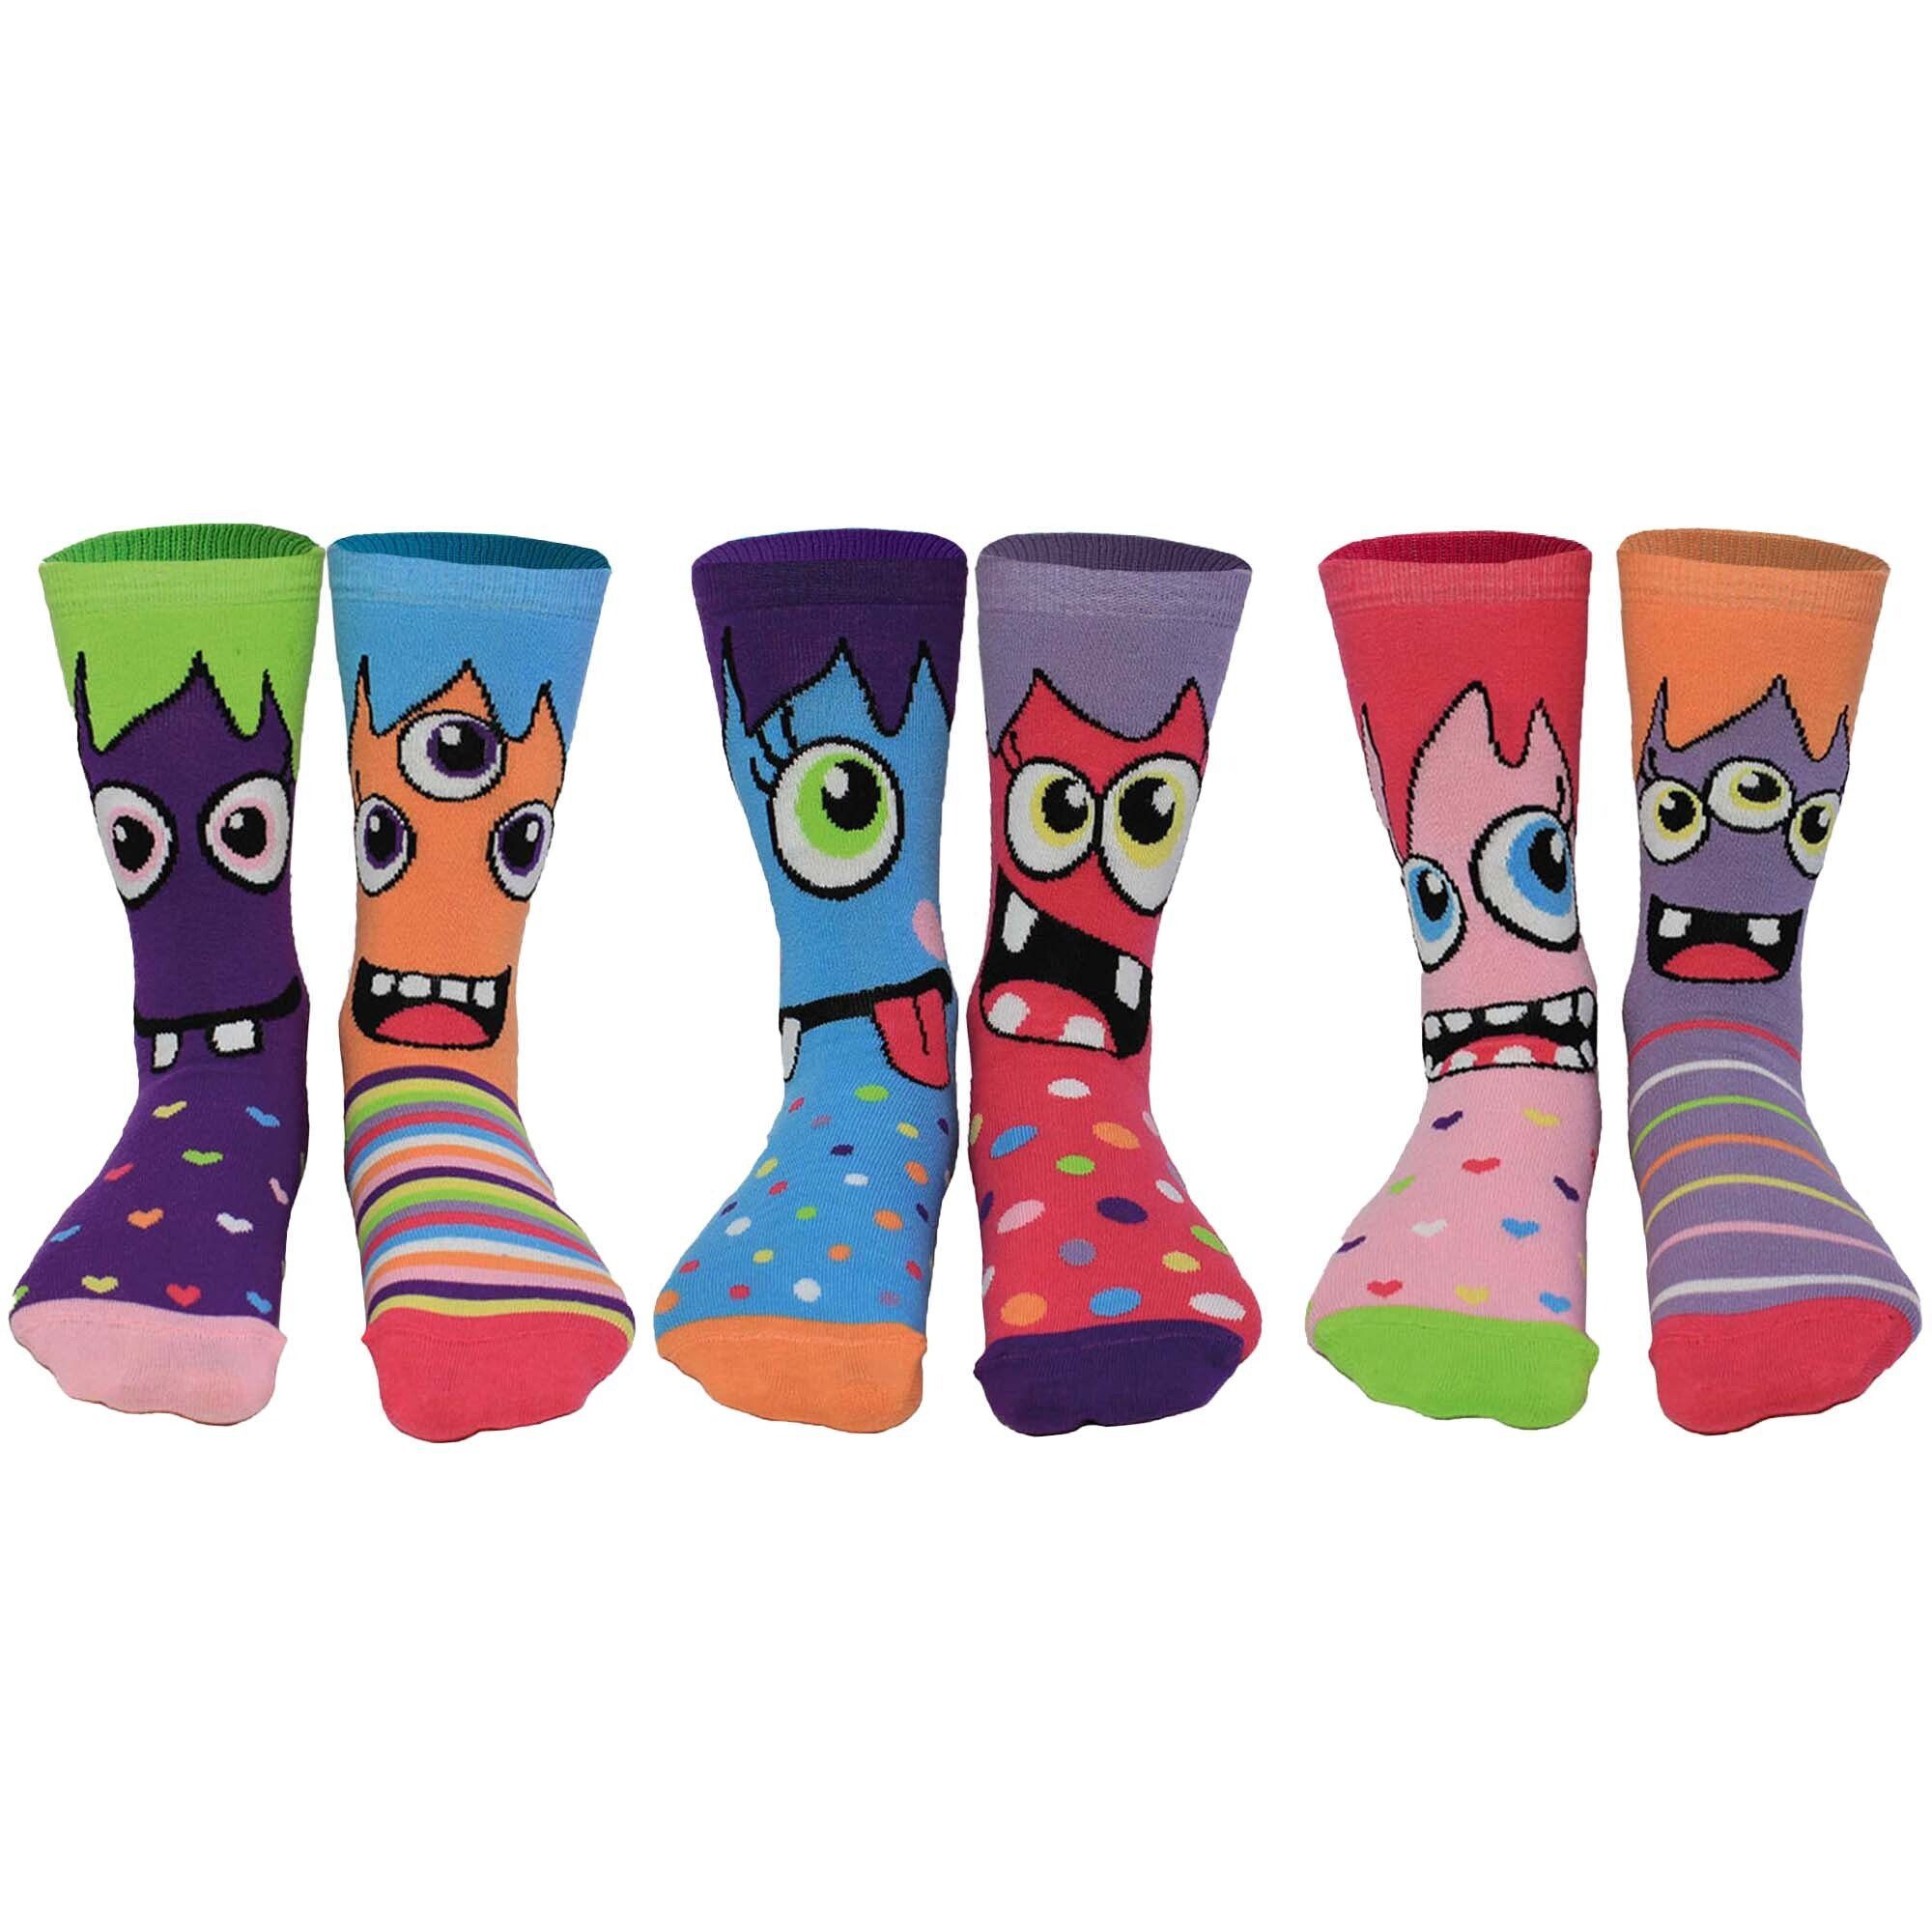 United Oddsocks Freizeitsocken Kinder Socken, 6 individuelle Socken - Miss Mashers